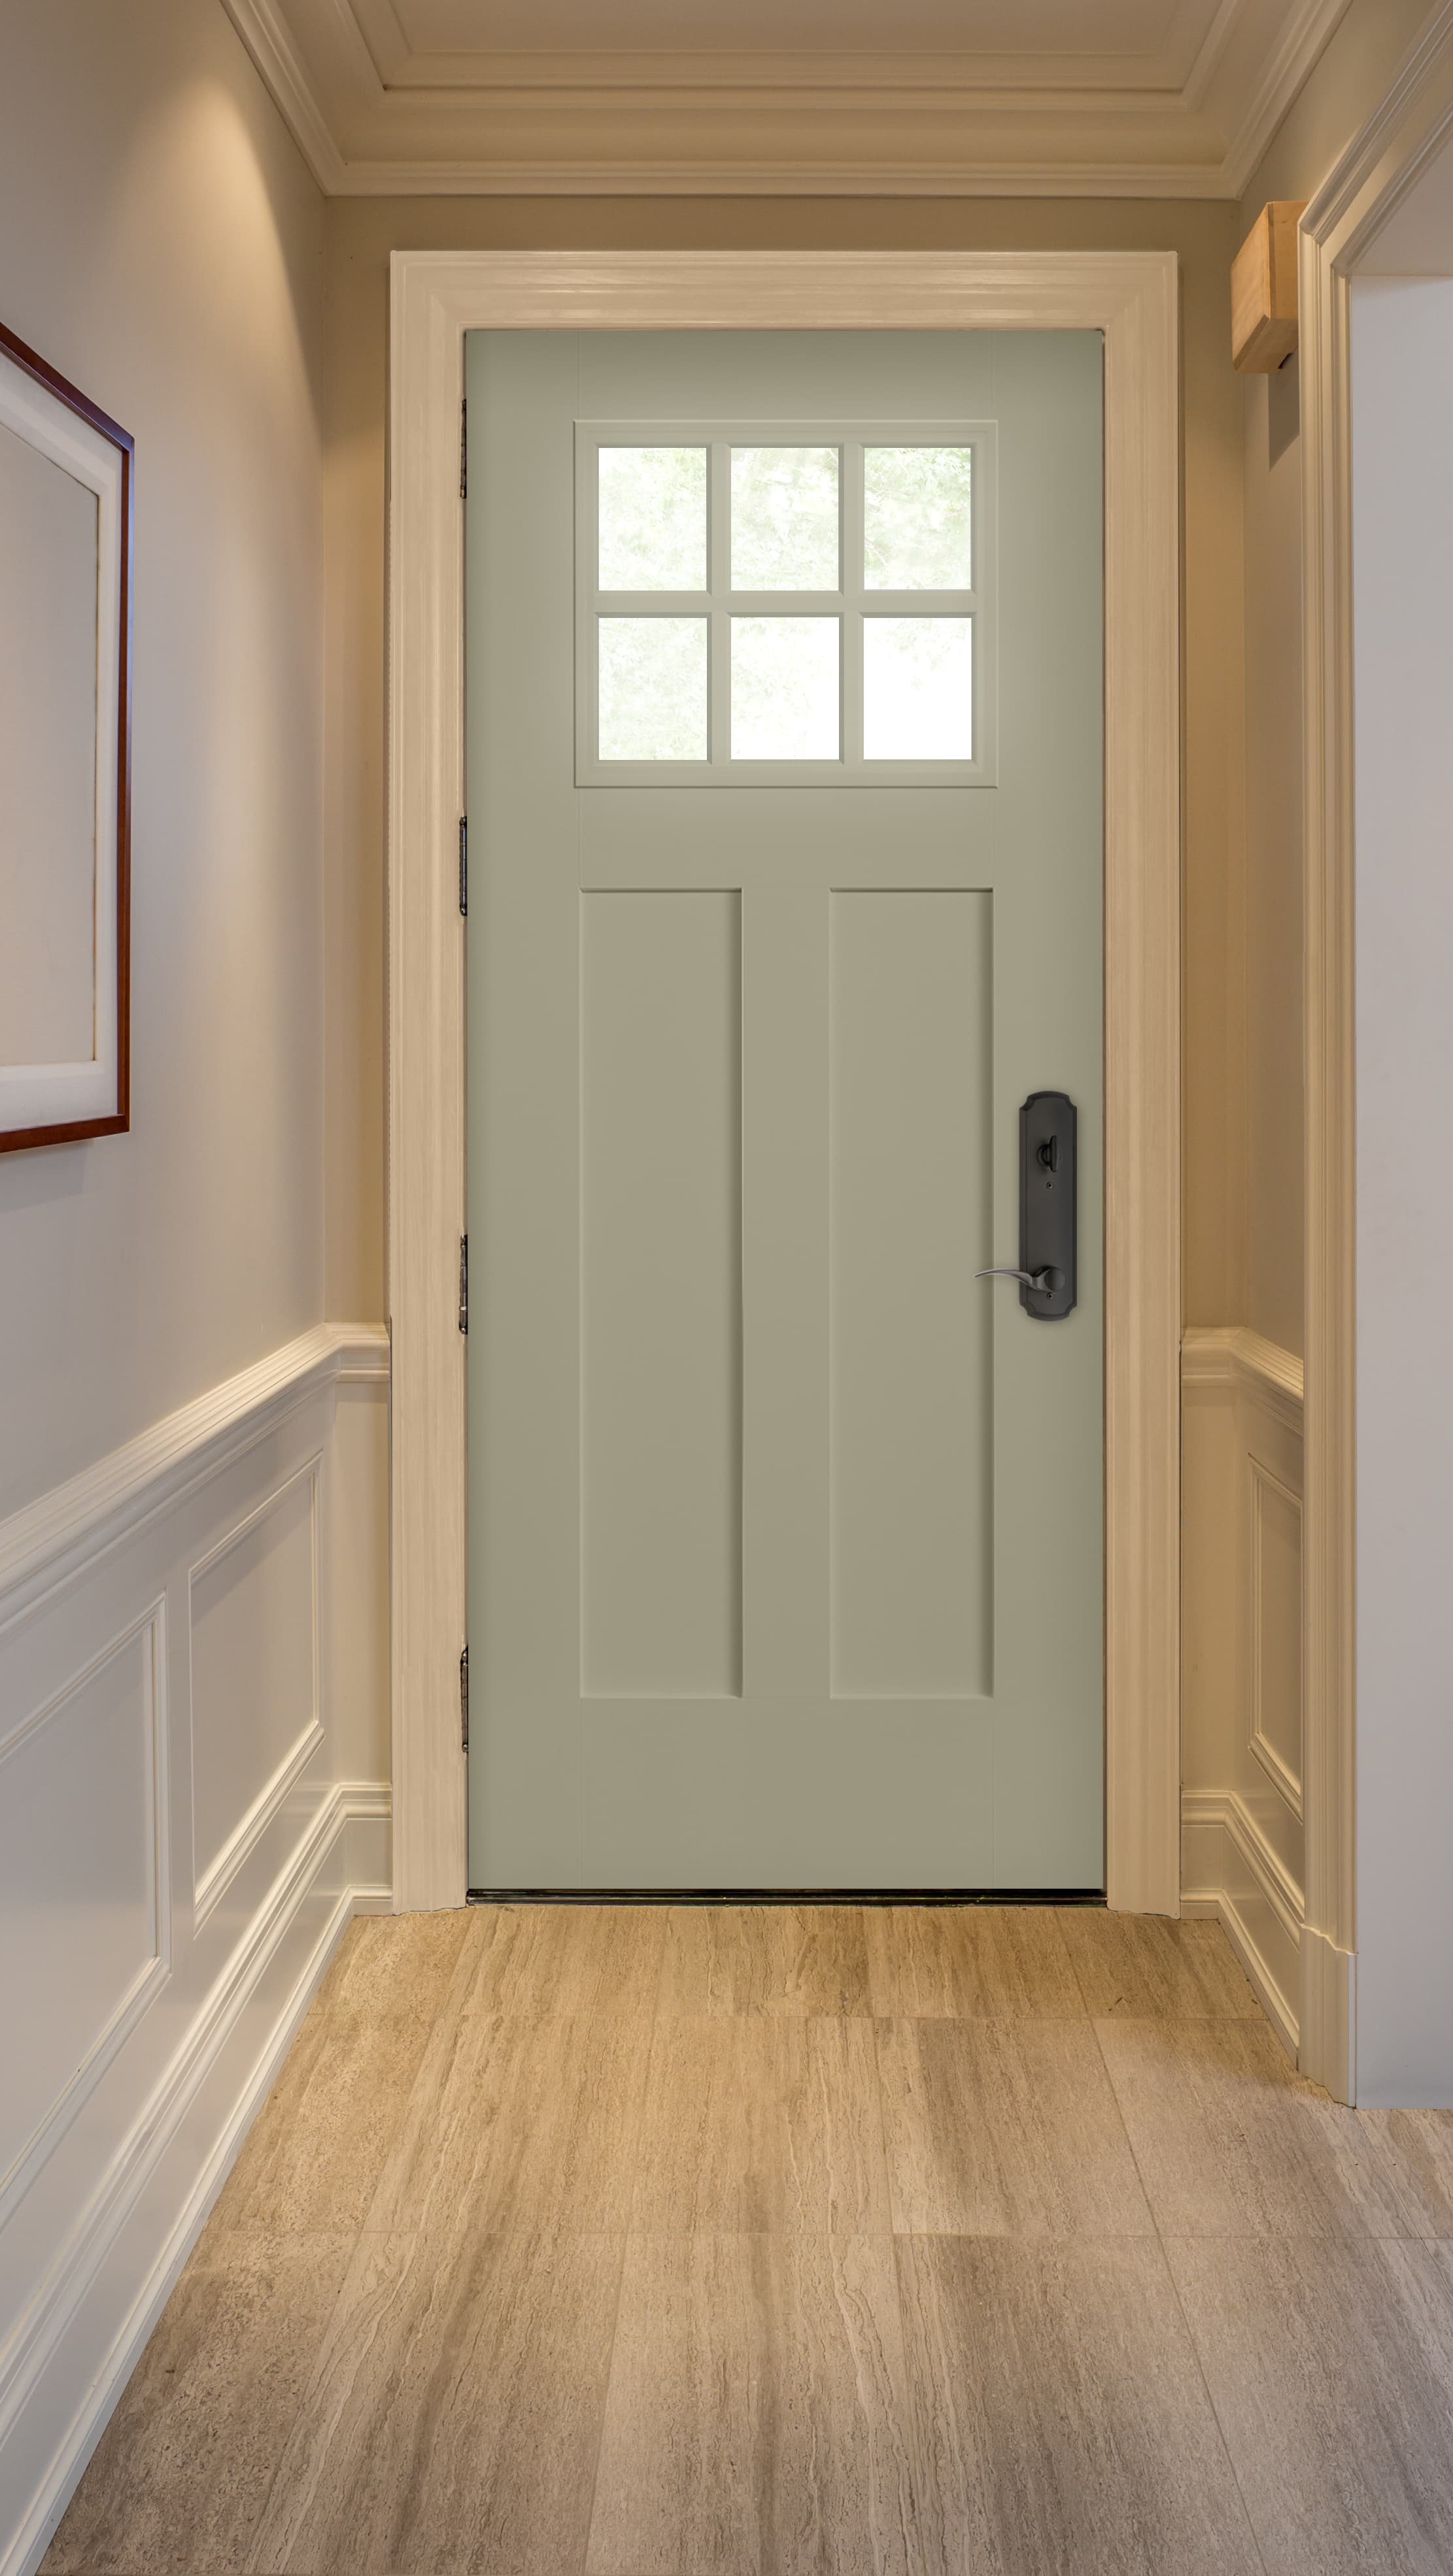 Blue craftsman front door lights up neutral color entryway